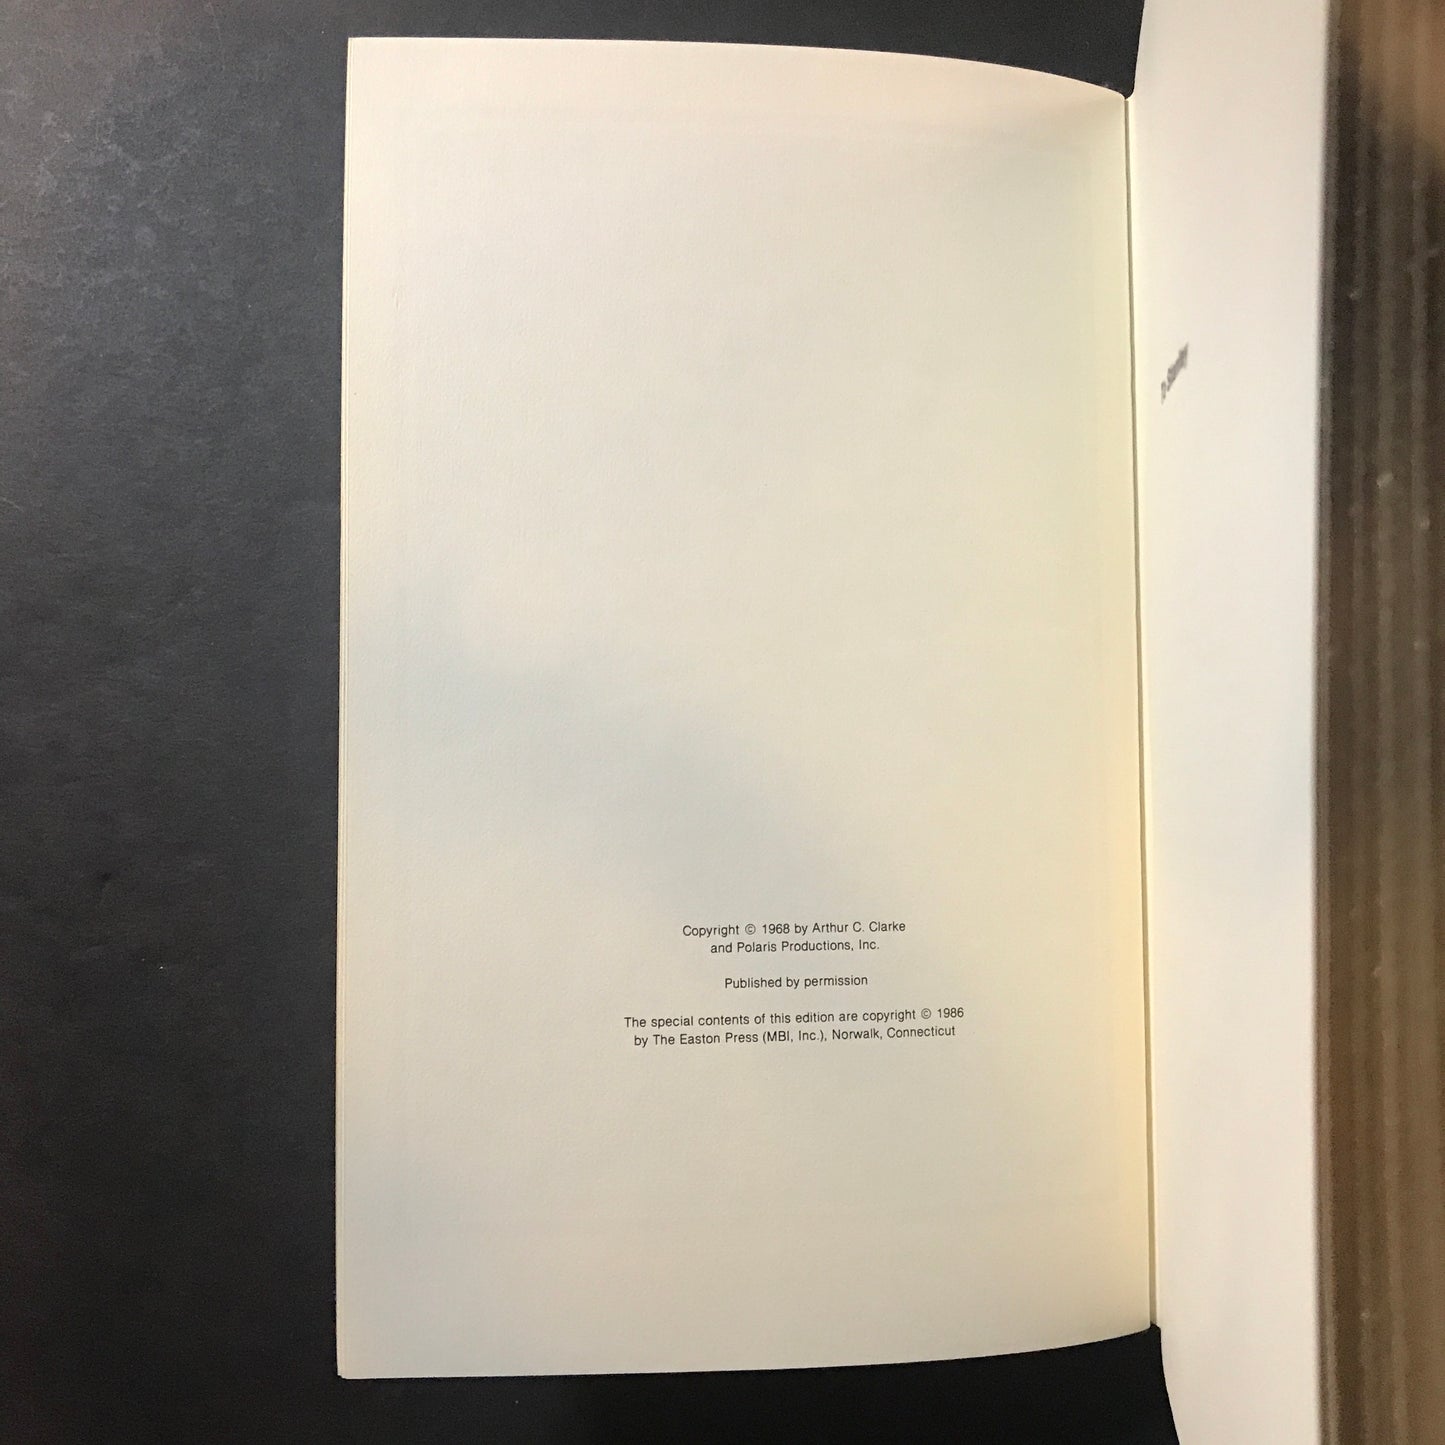 2001: A Space Odyssey - Arthur C. Clark - 1st Thus - Easton Press - 1986